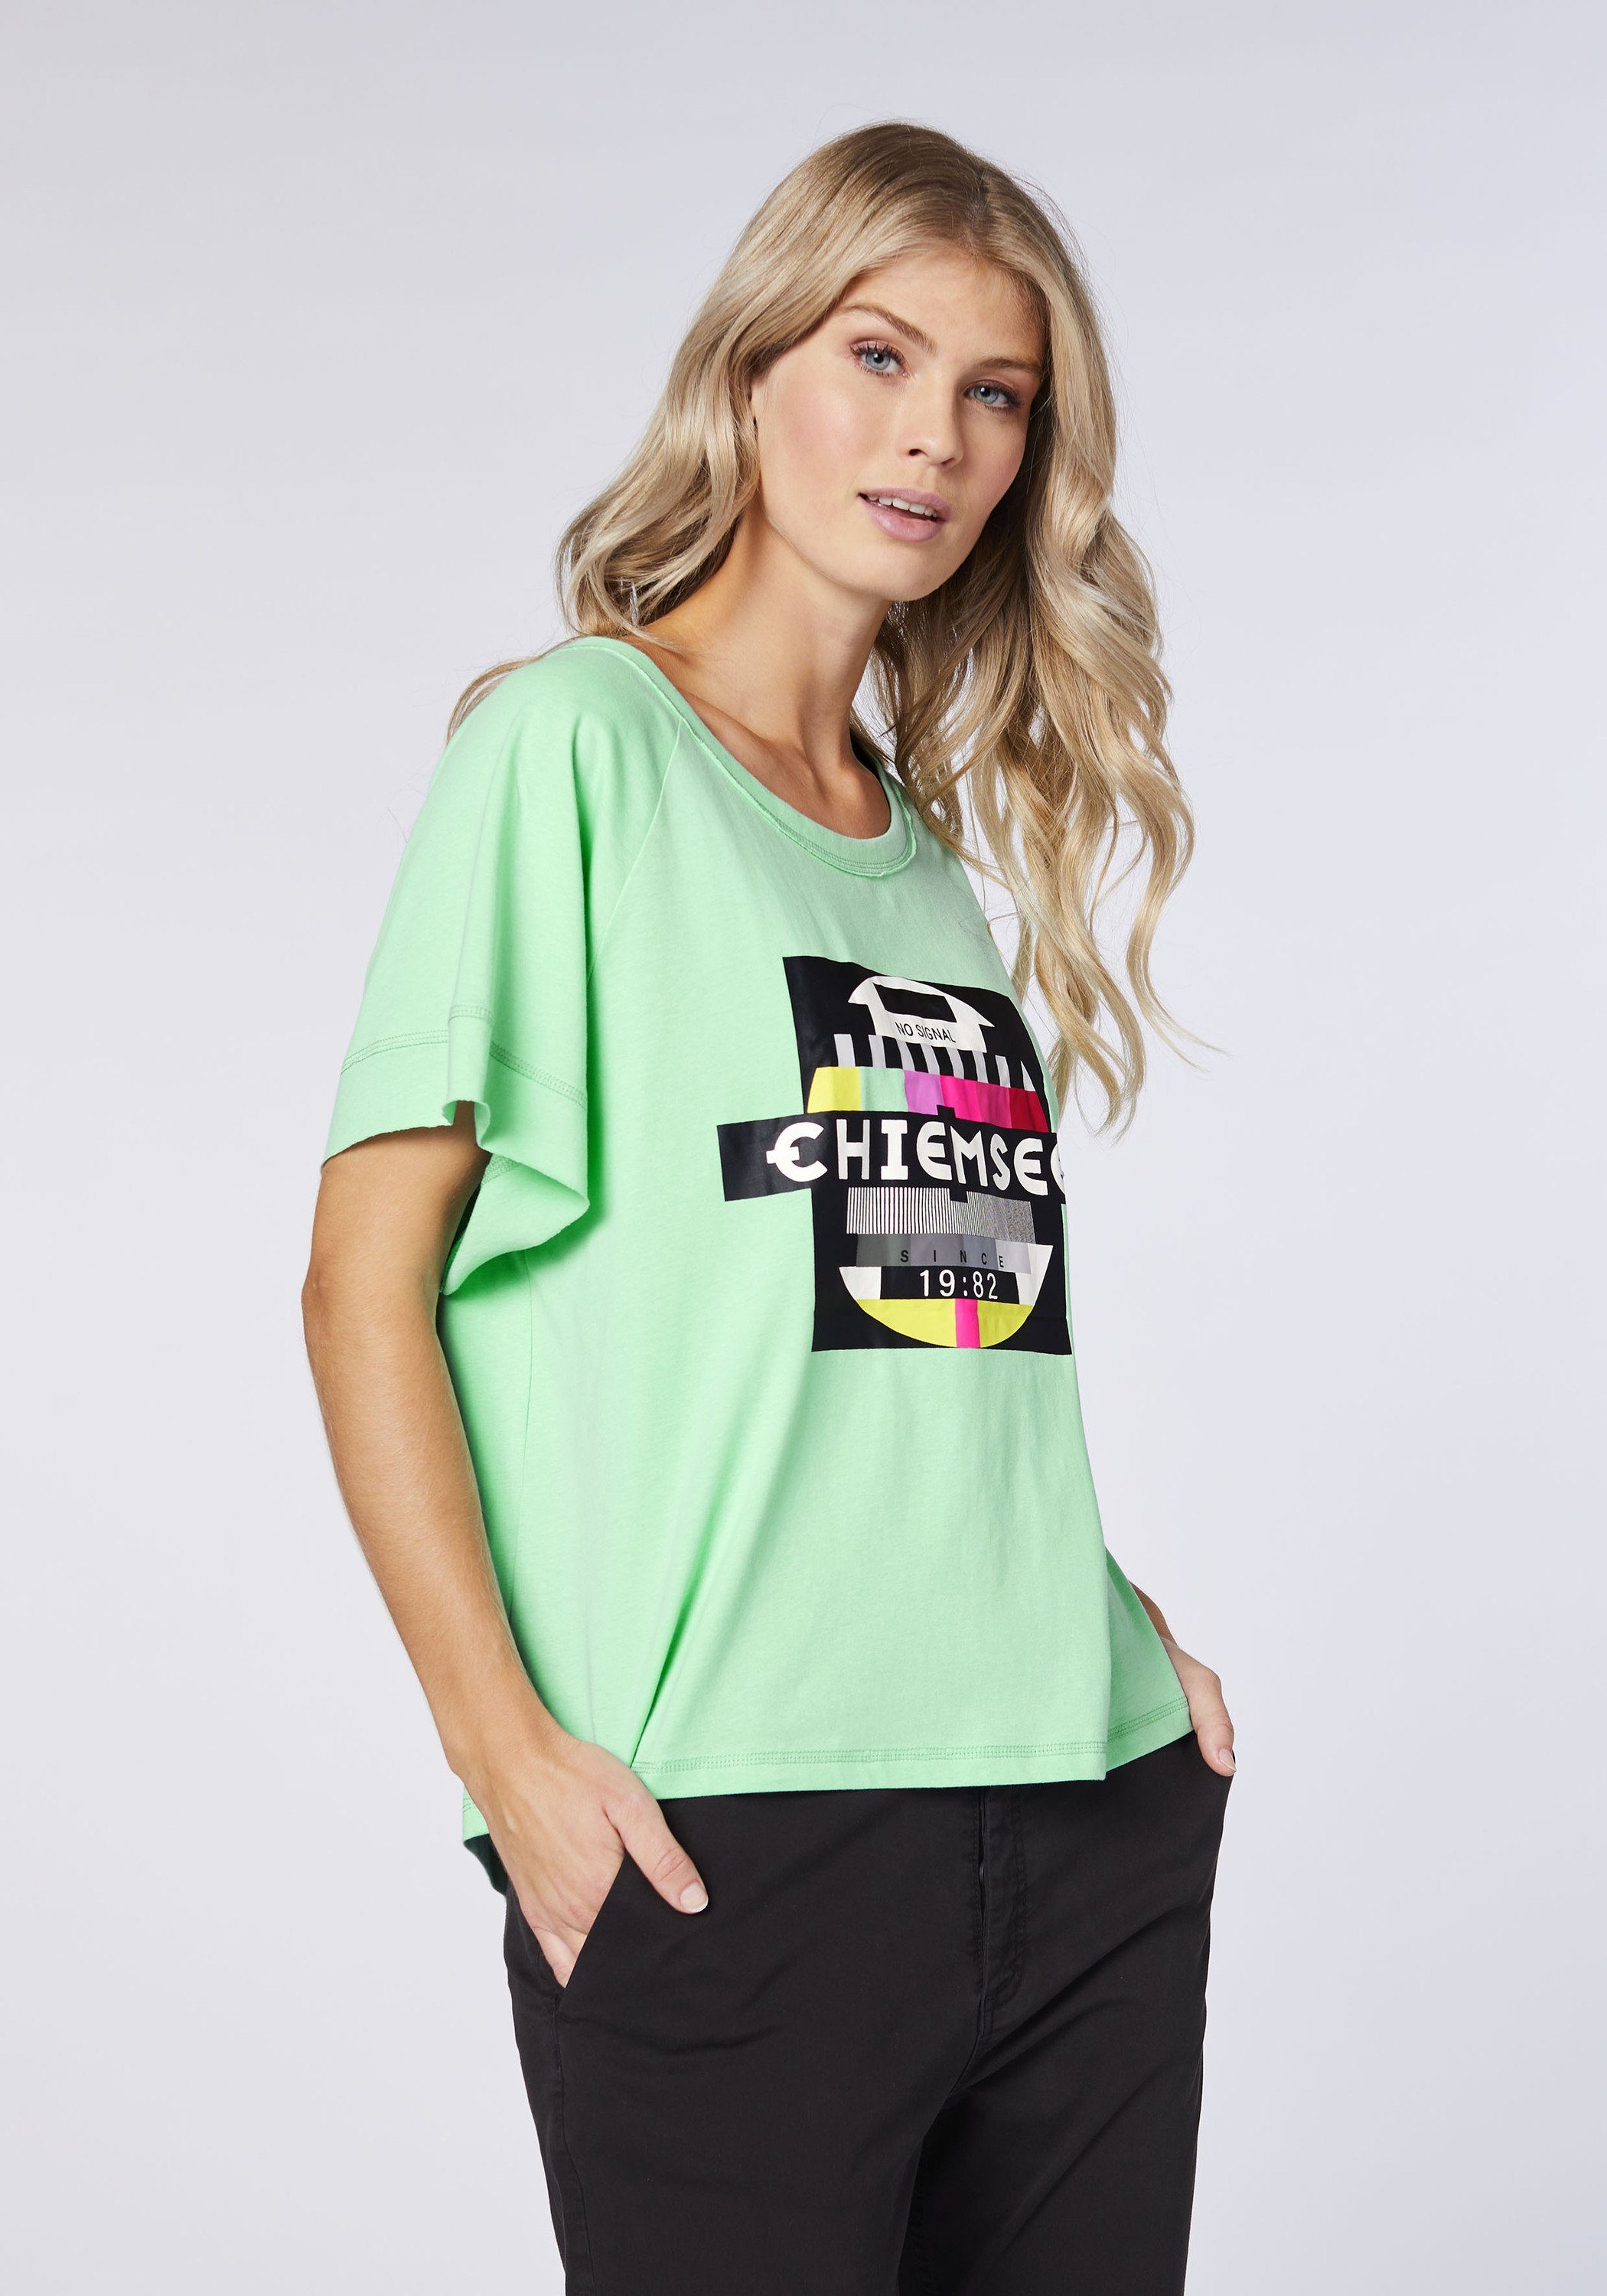 T-Shirt Green Kastiges Neptune mit Chiemsee NO-SIGNAL-Print 1 Print-Shirt